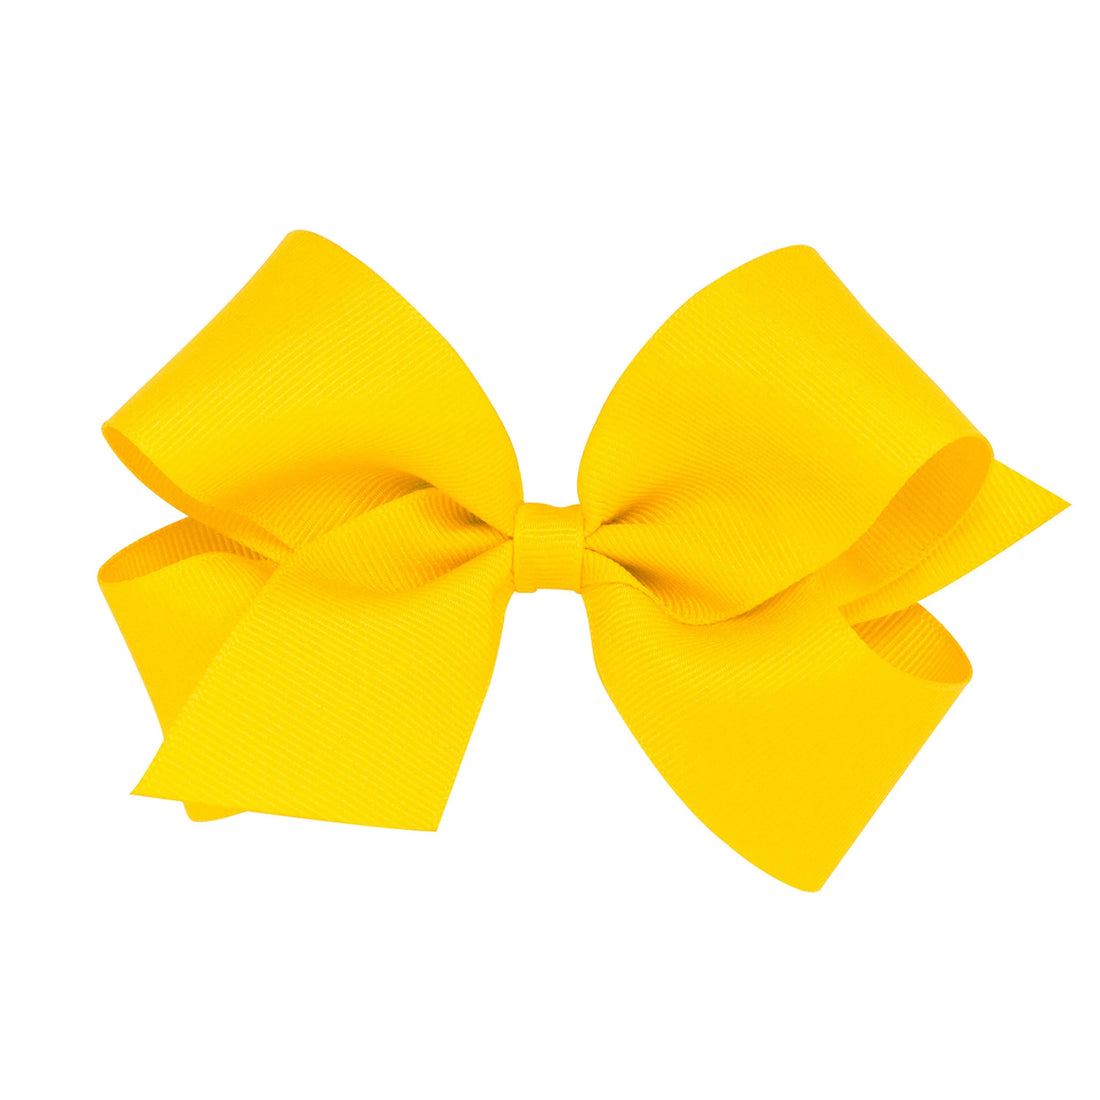 Wee Ones Medium Bow- Yellow